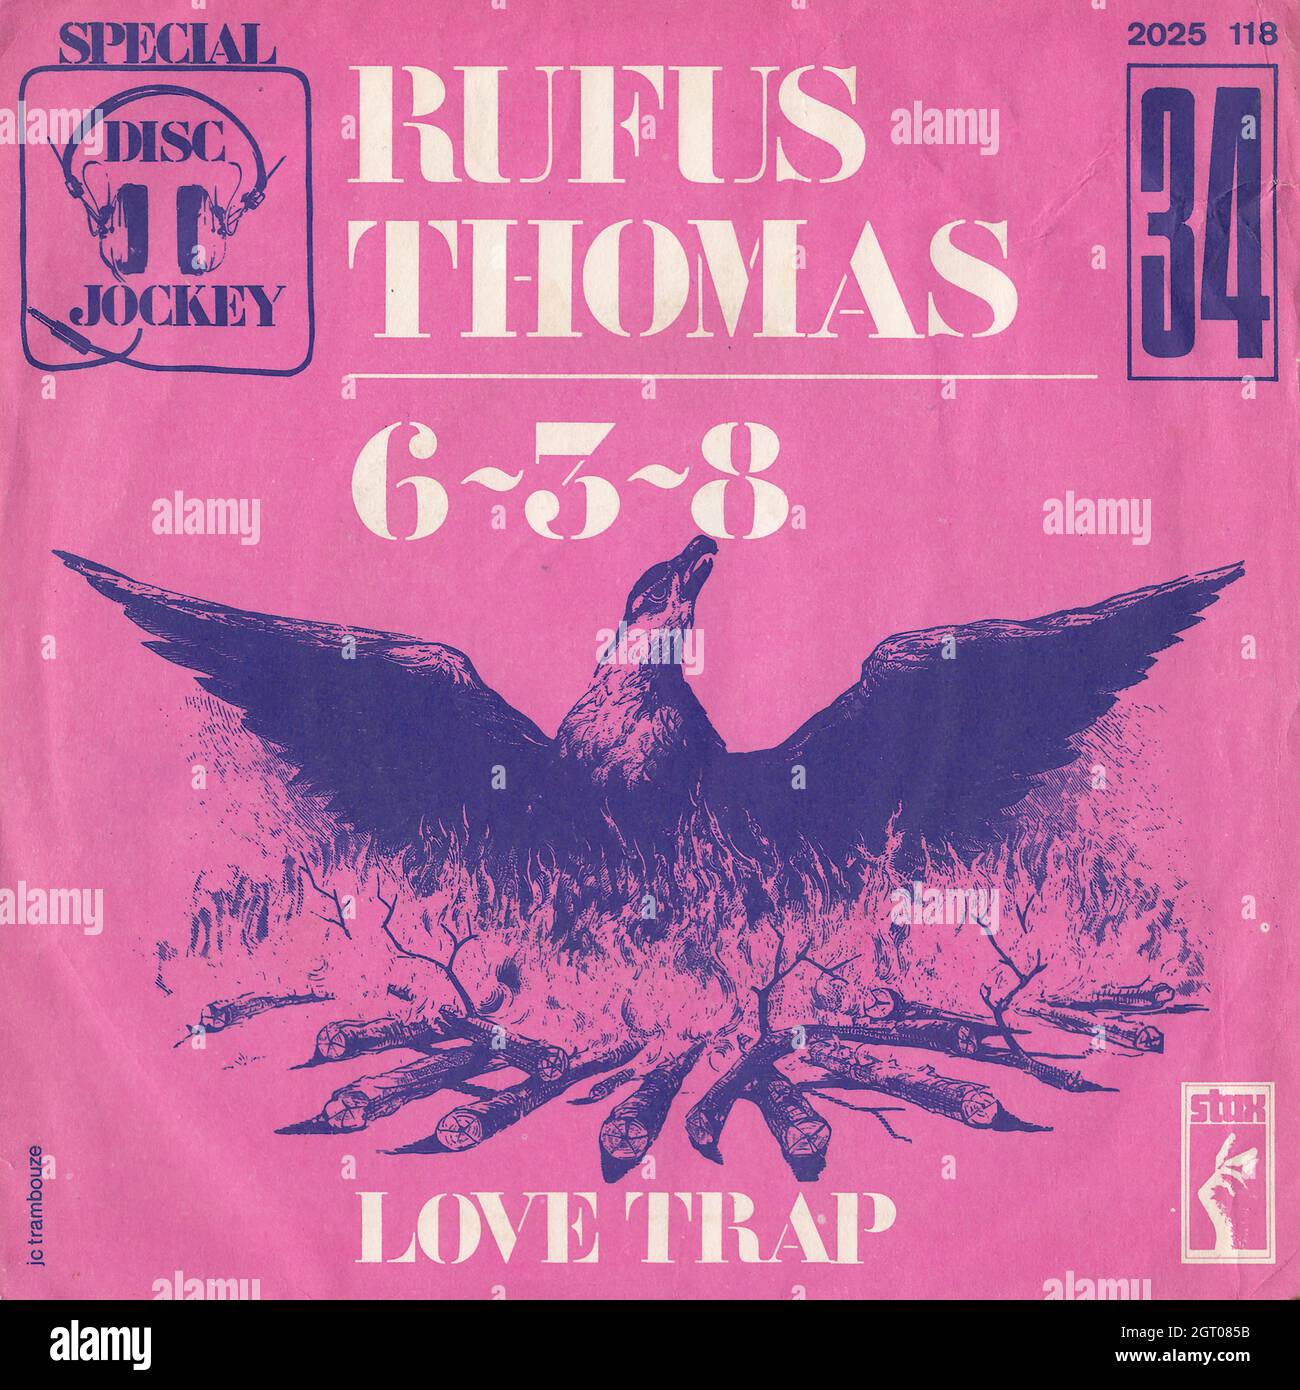 Rufus Thomas - 6-3-8 - Love trap 45rpm - Vintage Vinyl Record Cover Stock Photo